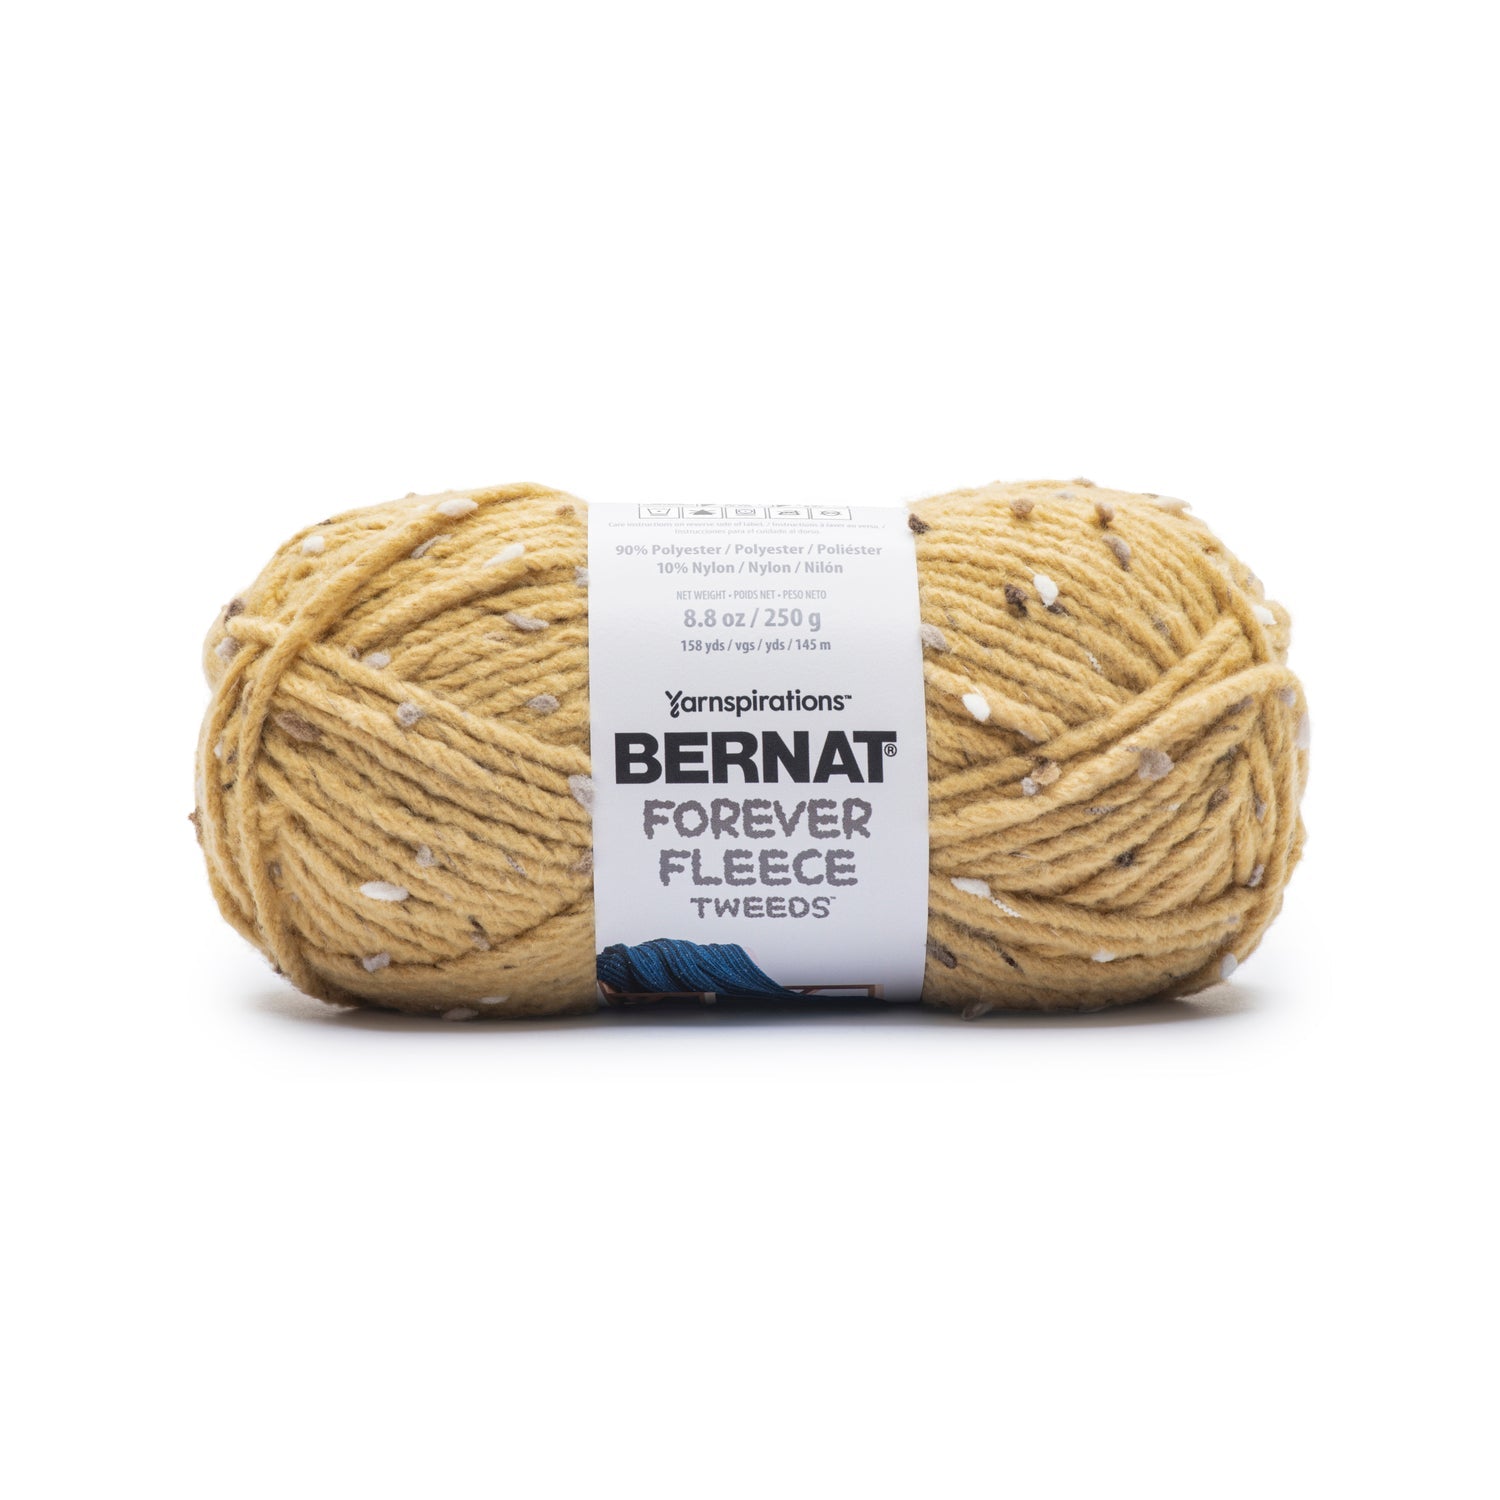 Bernat Forever Fleece Tweeds Yarn (250g/8.8oz) Amber Tweed